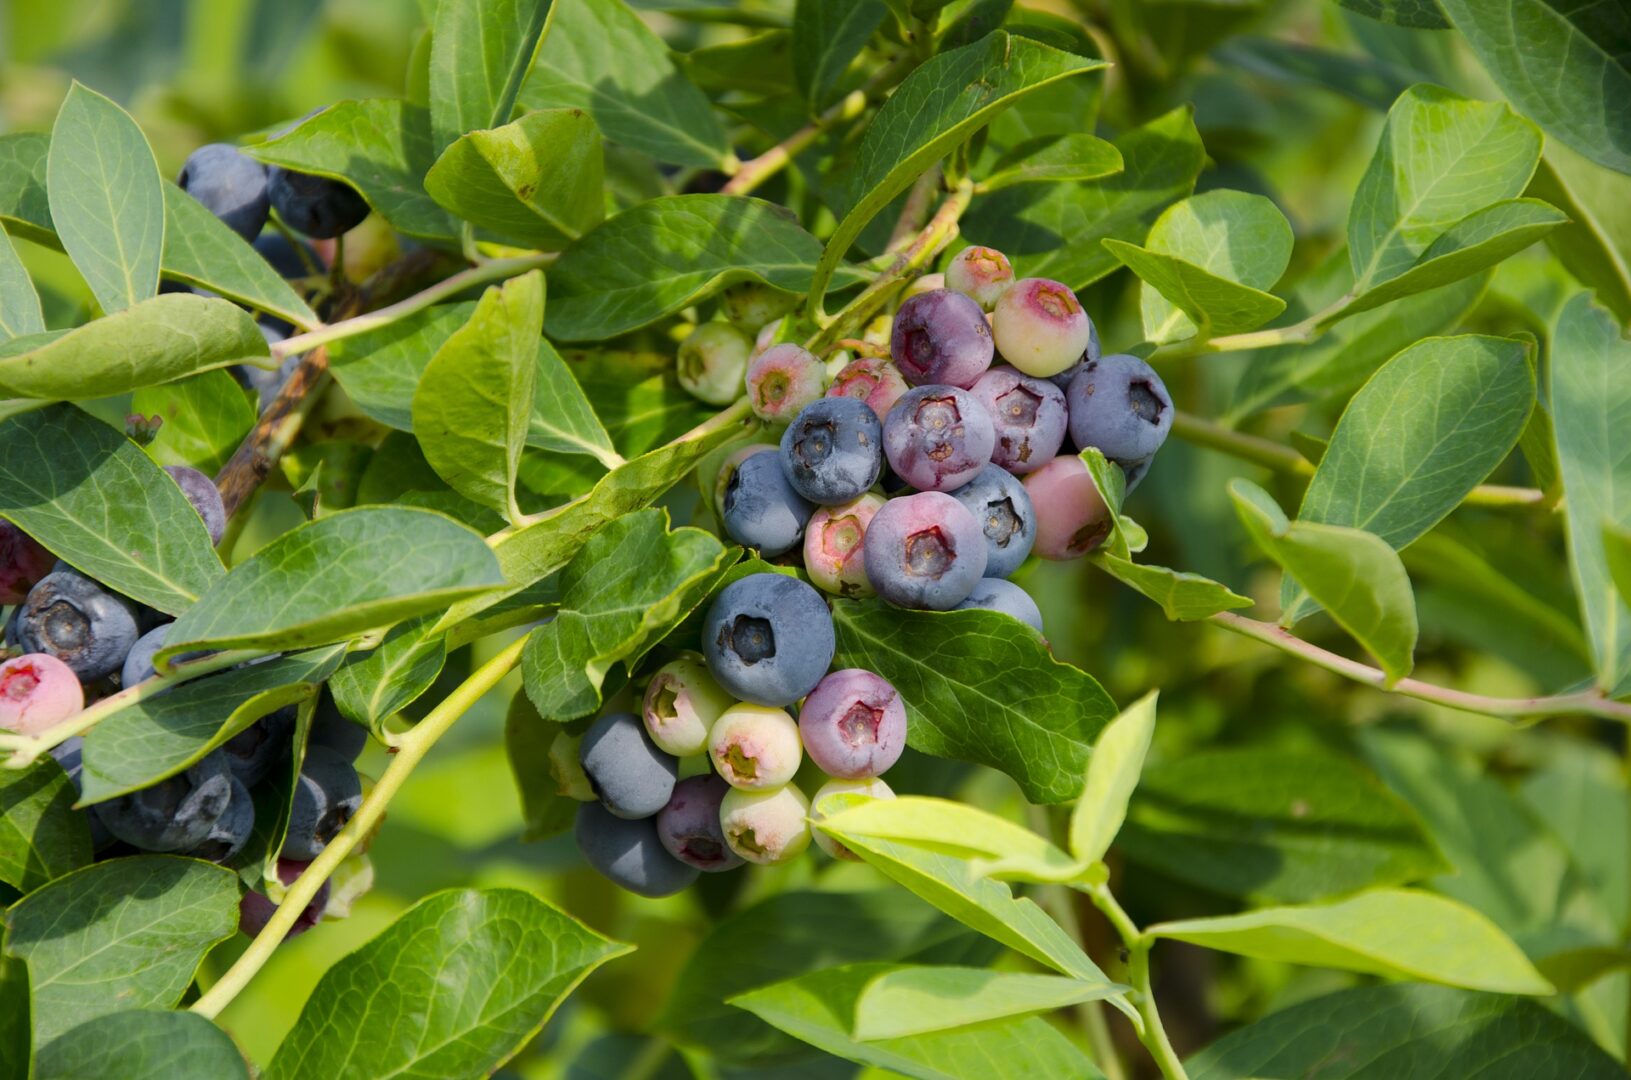 Cluster of blueberries still on their bush